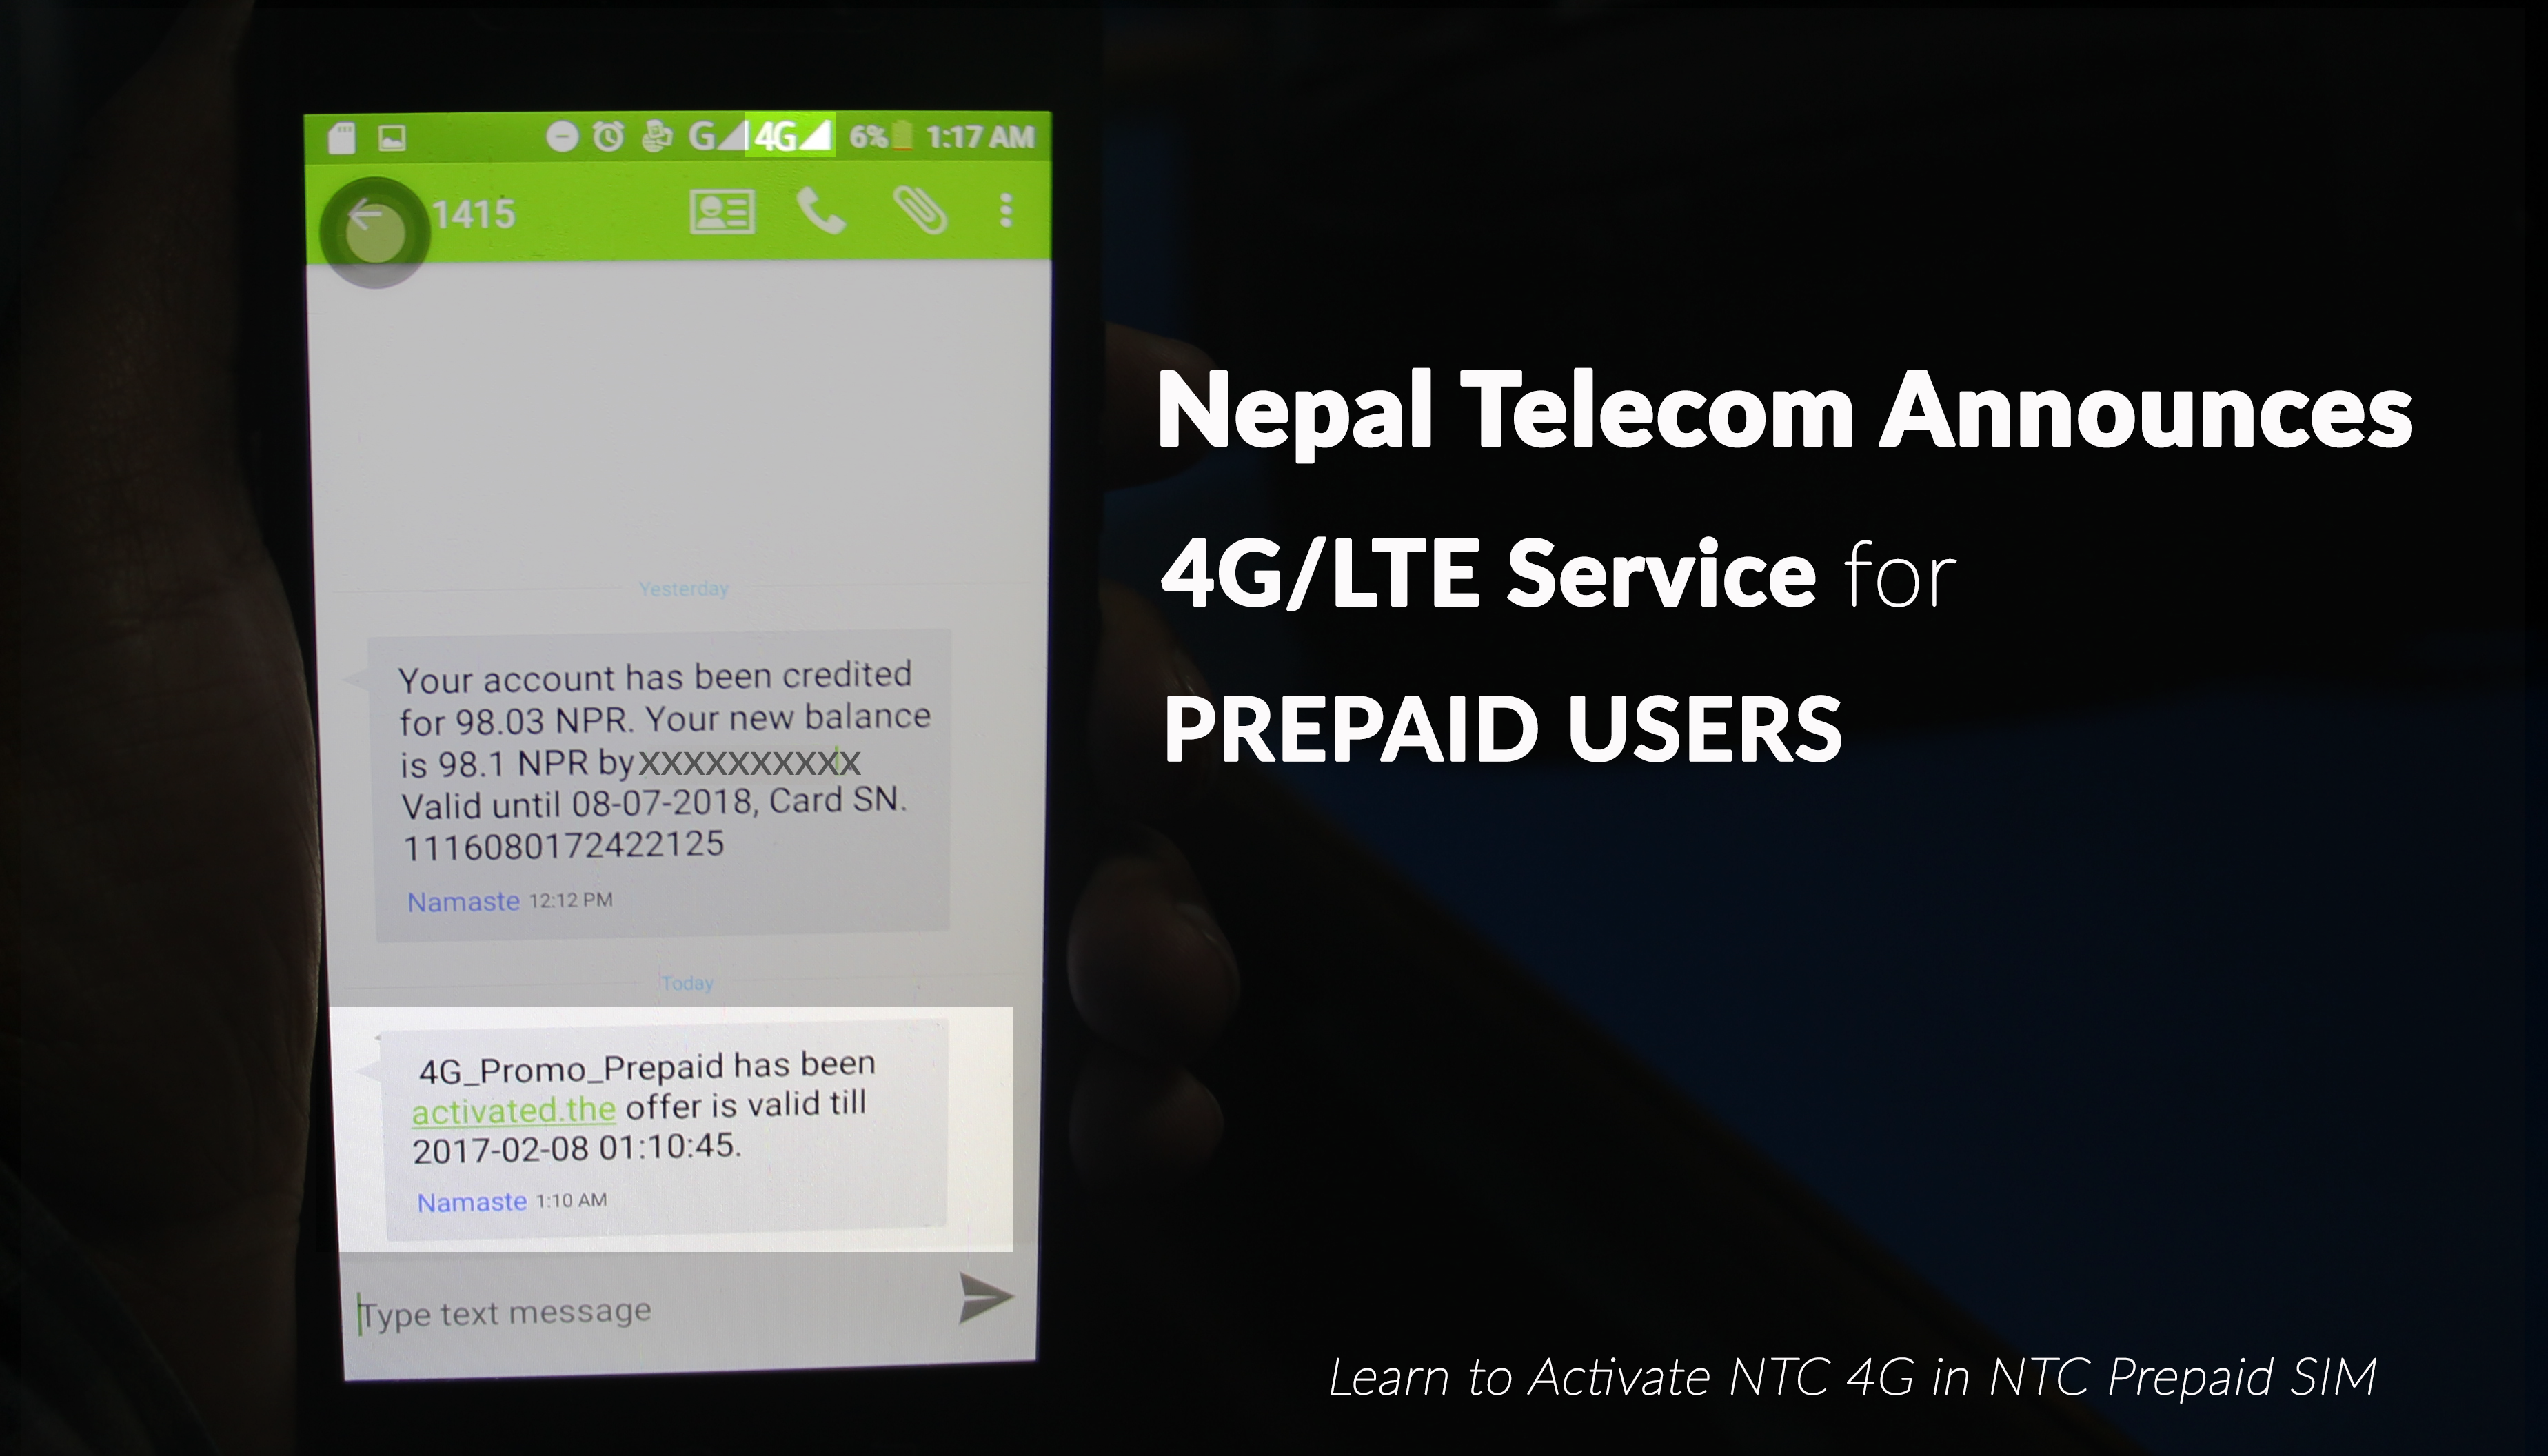 ntc 4g for prepaid users